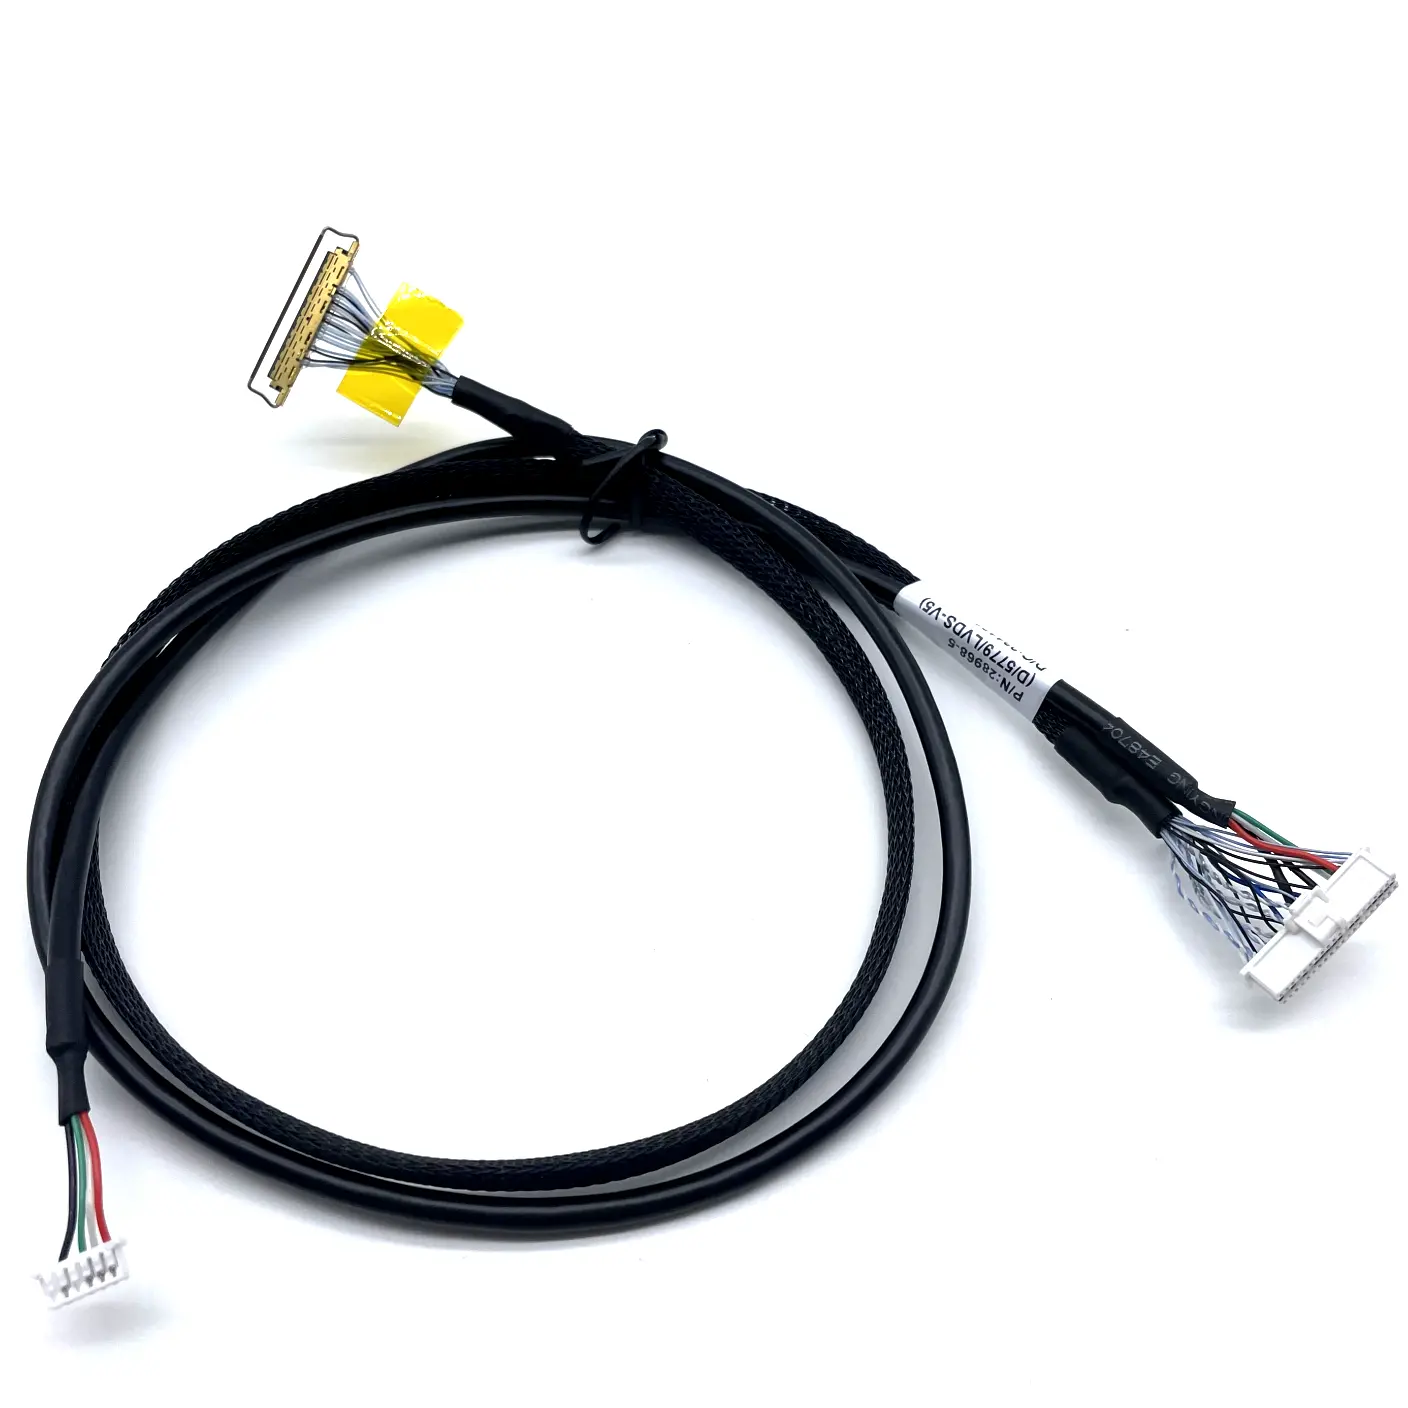 Pin personalizado Conjunto cabo torcido LVDS Wire Harness cabo conexão eletrônica